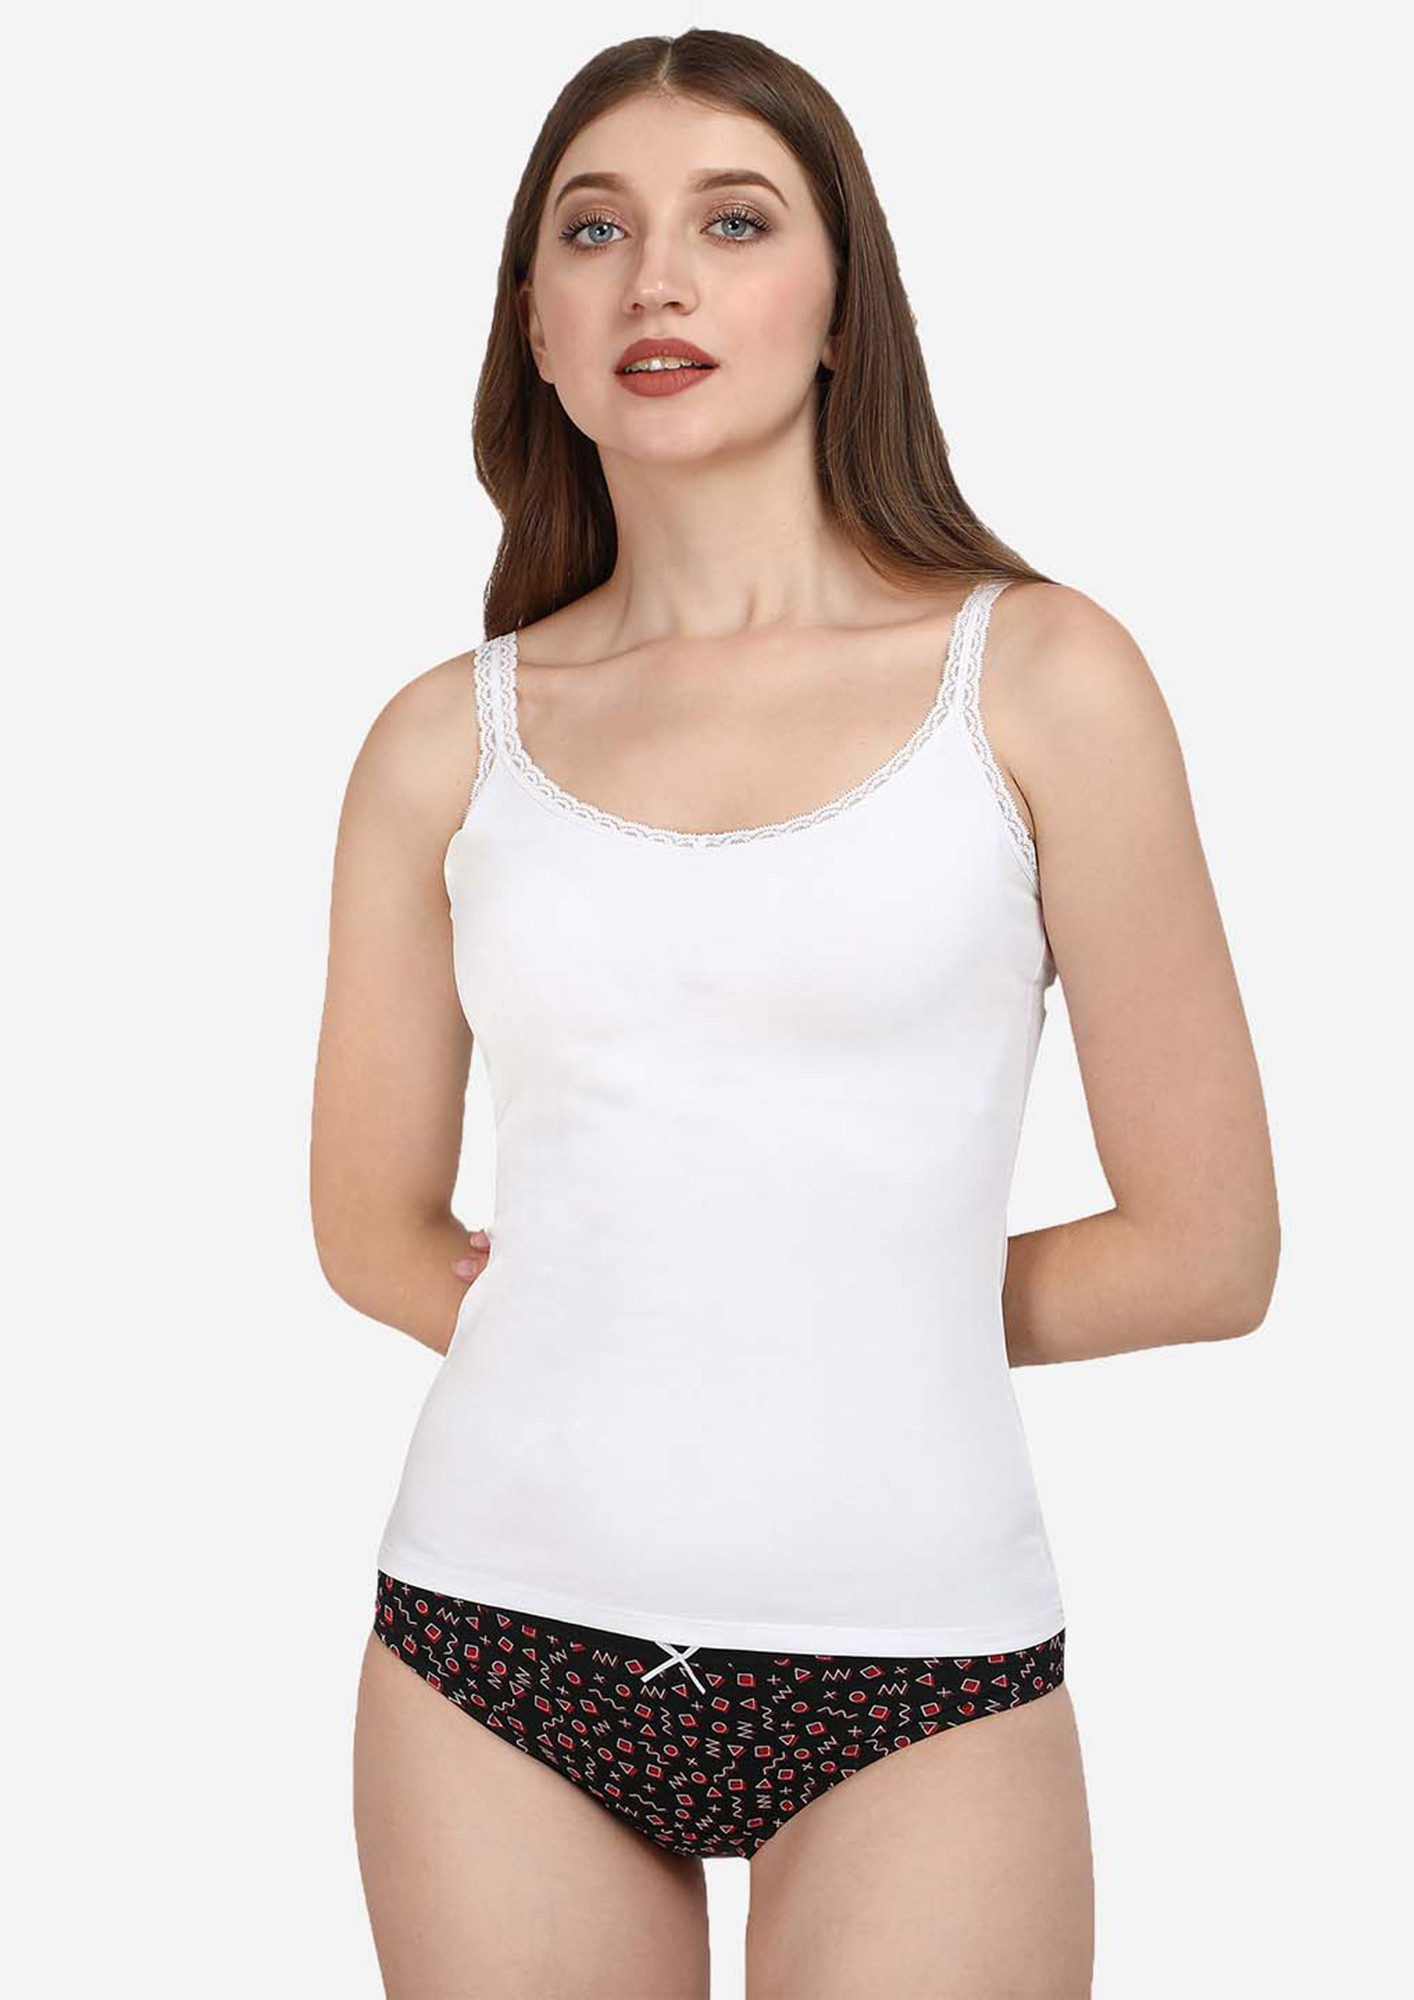 SOIE Women's White-In-Me Cotton Spandex Camisole